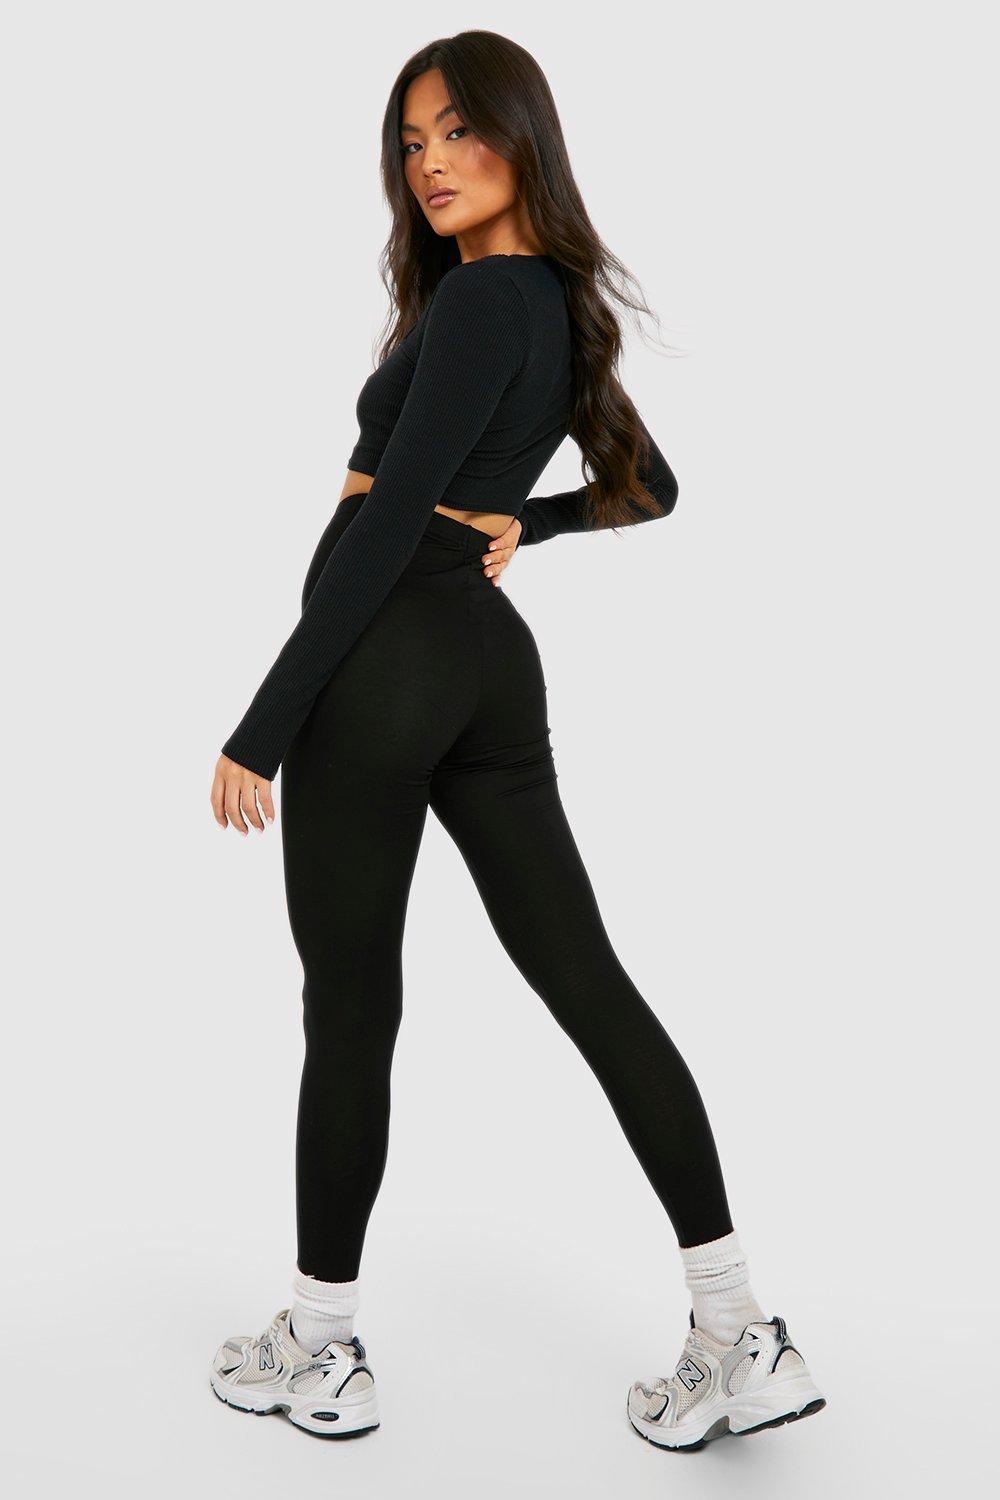 https://media.boohoo.com/i/boohoo/gzz36639_black_xl_1/female-black-black-high-waisted-basic-leggings